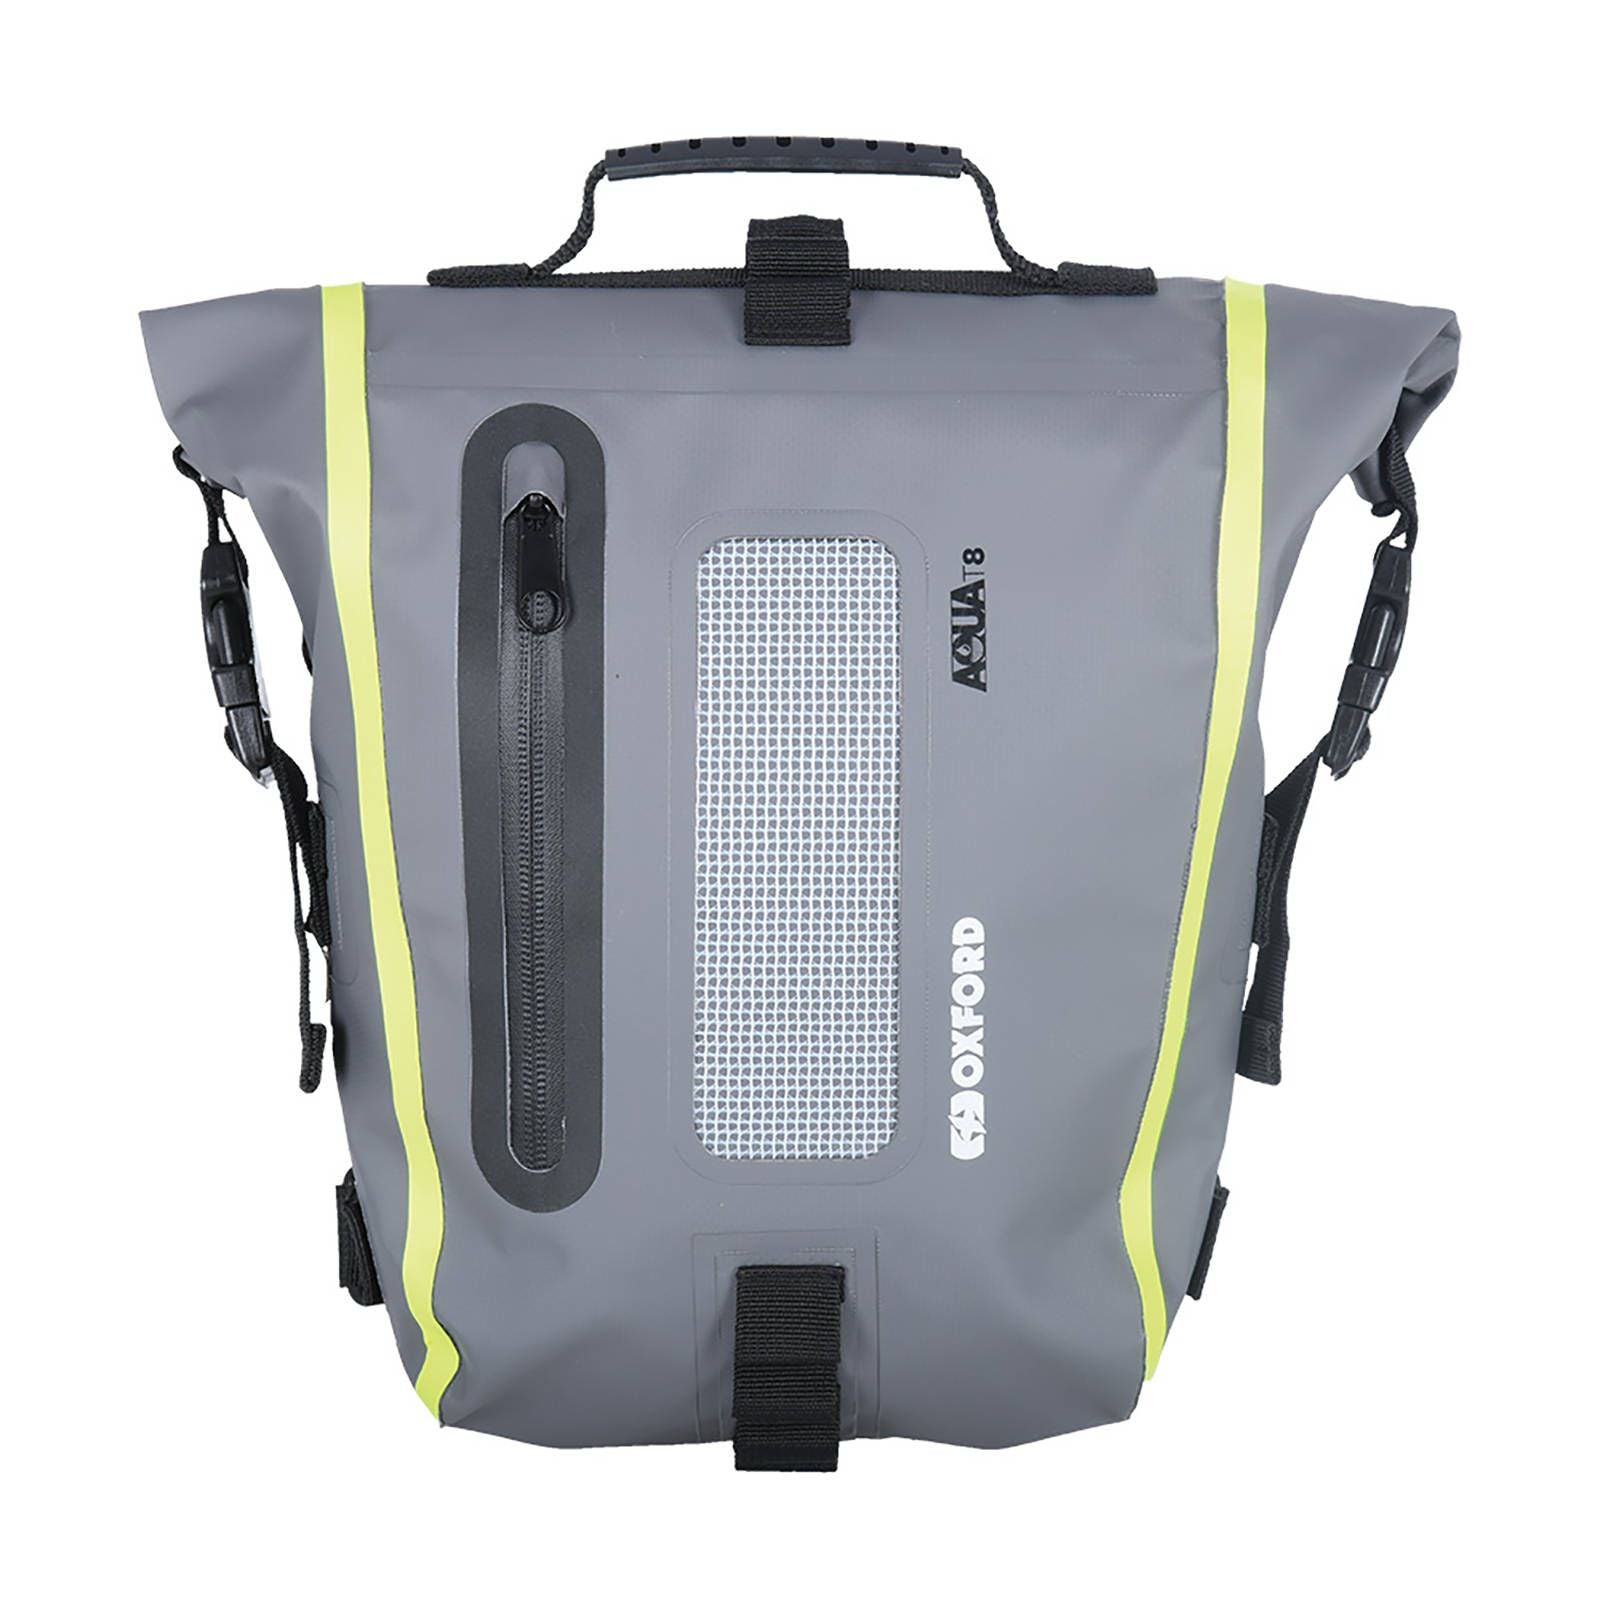 New OXFORD Aqua Tail Bag T8 - Black / Grey / Fluro Yellow #OXOL465